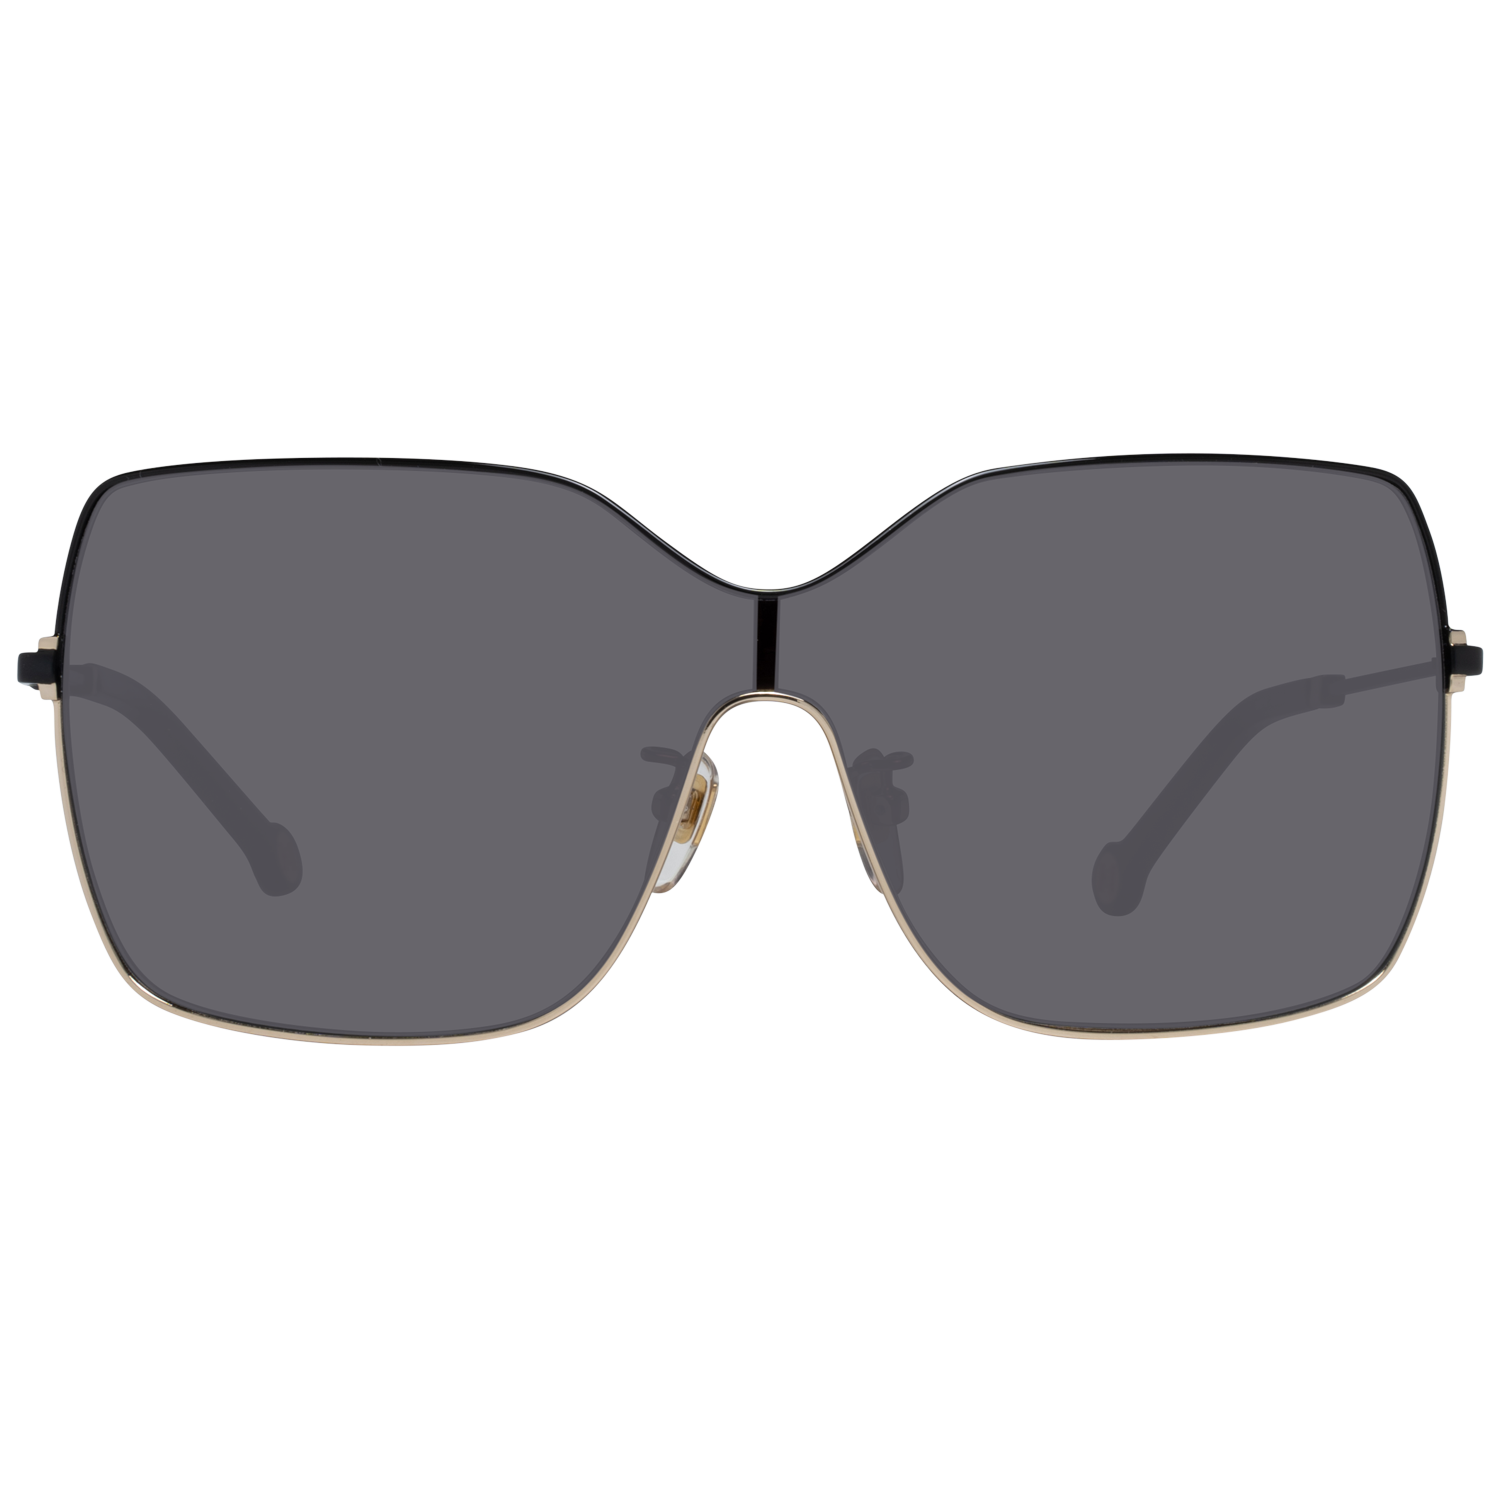 Carolina Herrera Sunglasses Carolina Herrera Sunglasses SHE175 301 99 Eyeglasses Eyewear UK USA Australia 